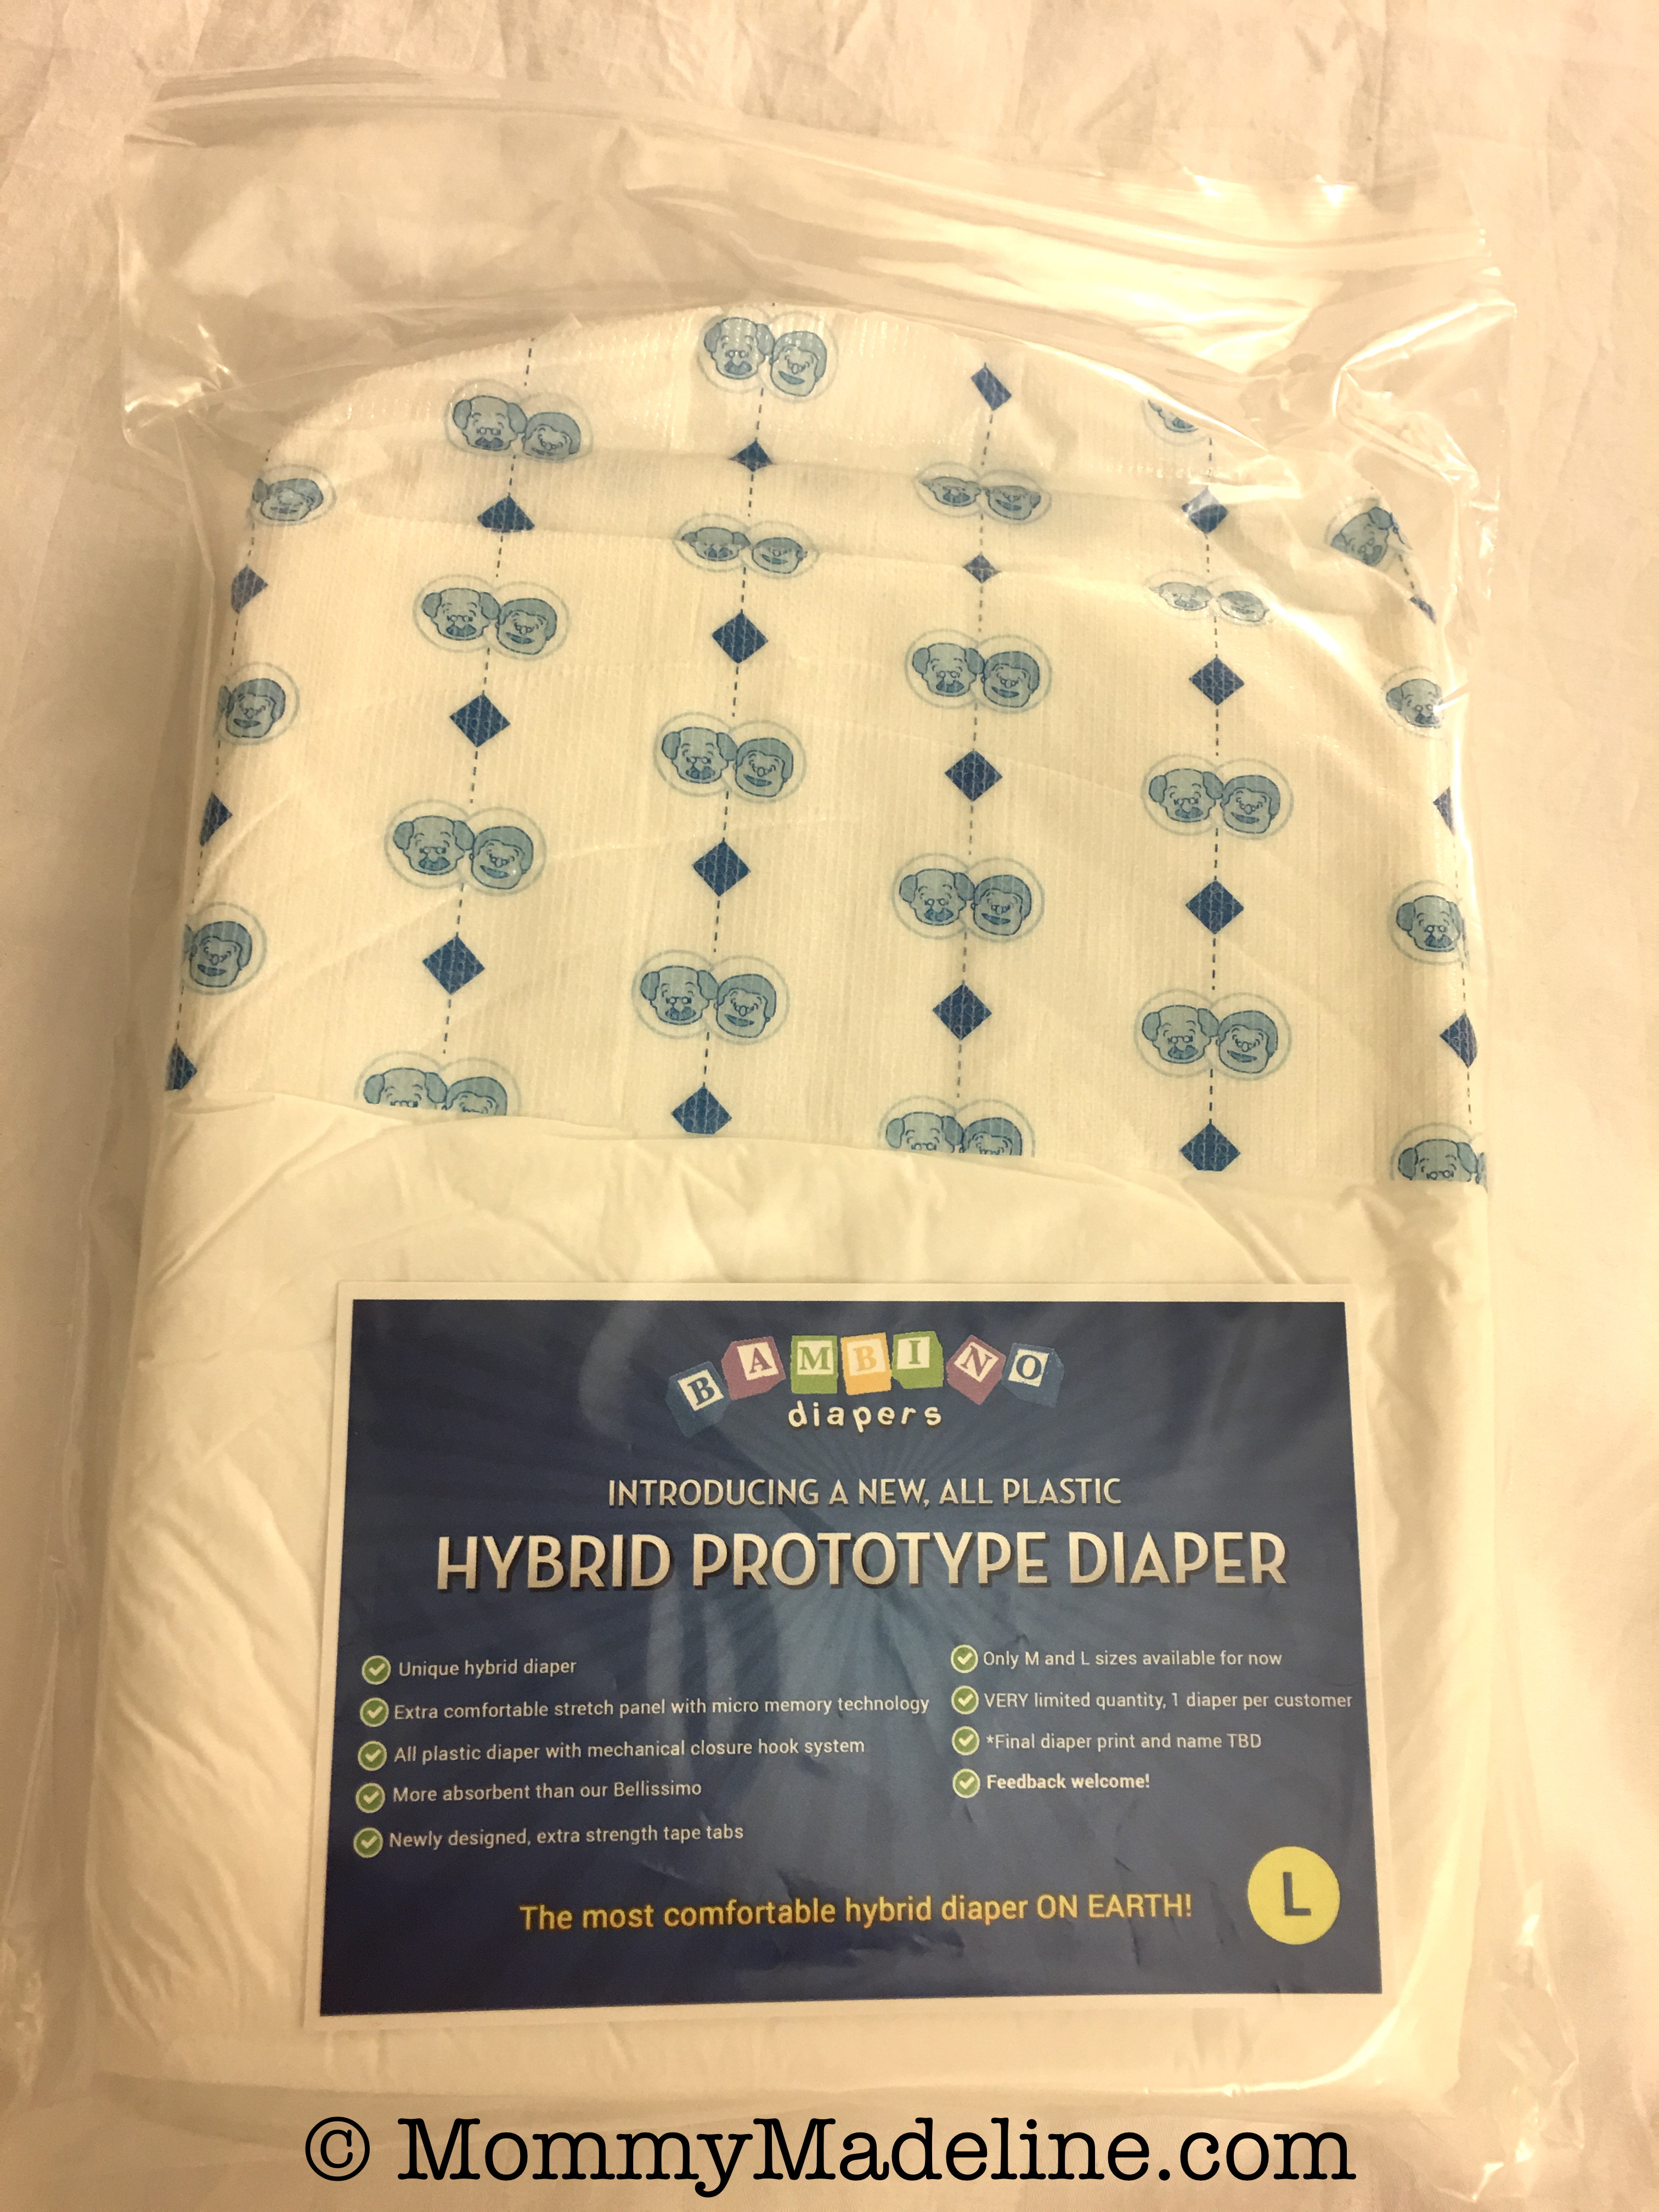 A Bambino prototype hybrid diaper